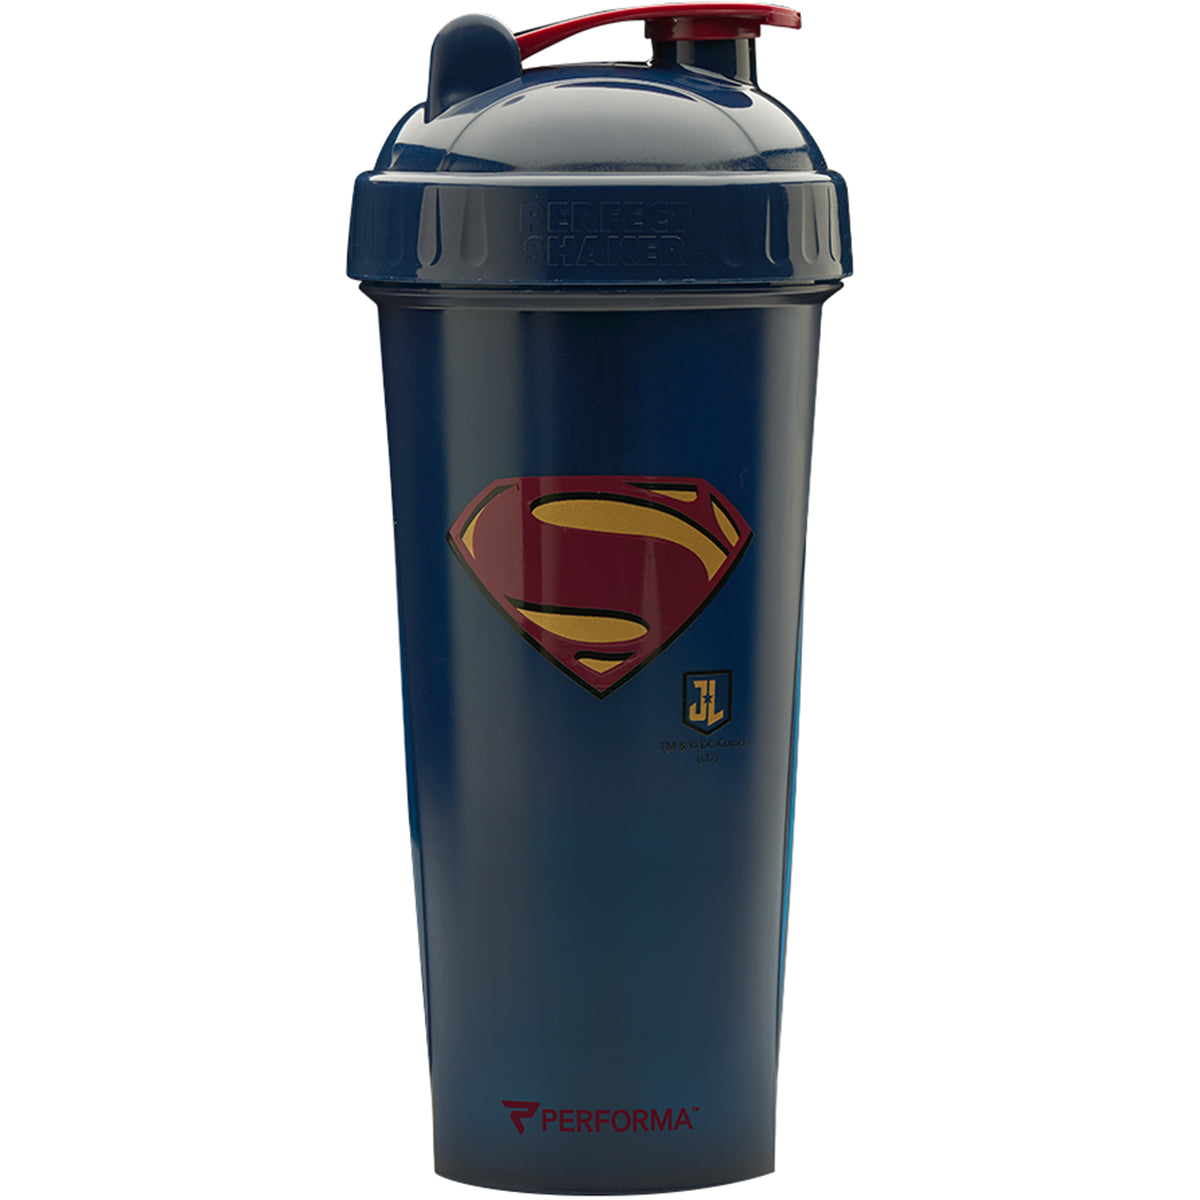 Performa PerfectShaker 28 oz. Justice League Shaker Cup Bottle - Superman PerfectShaker